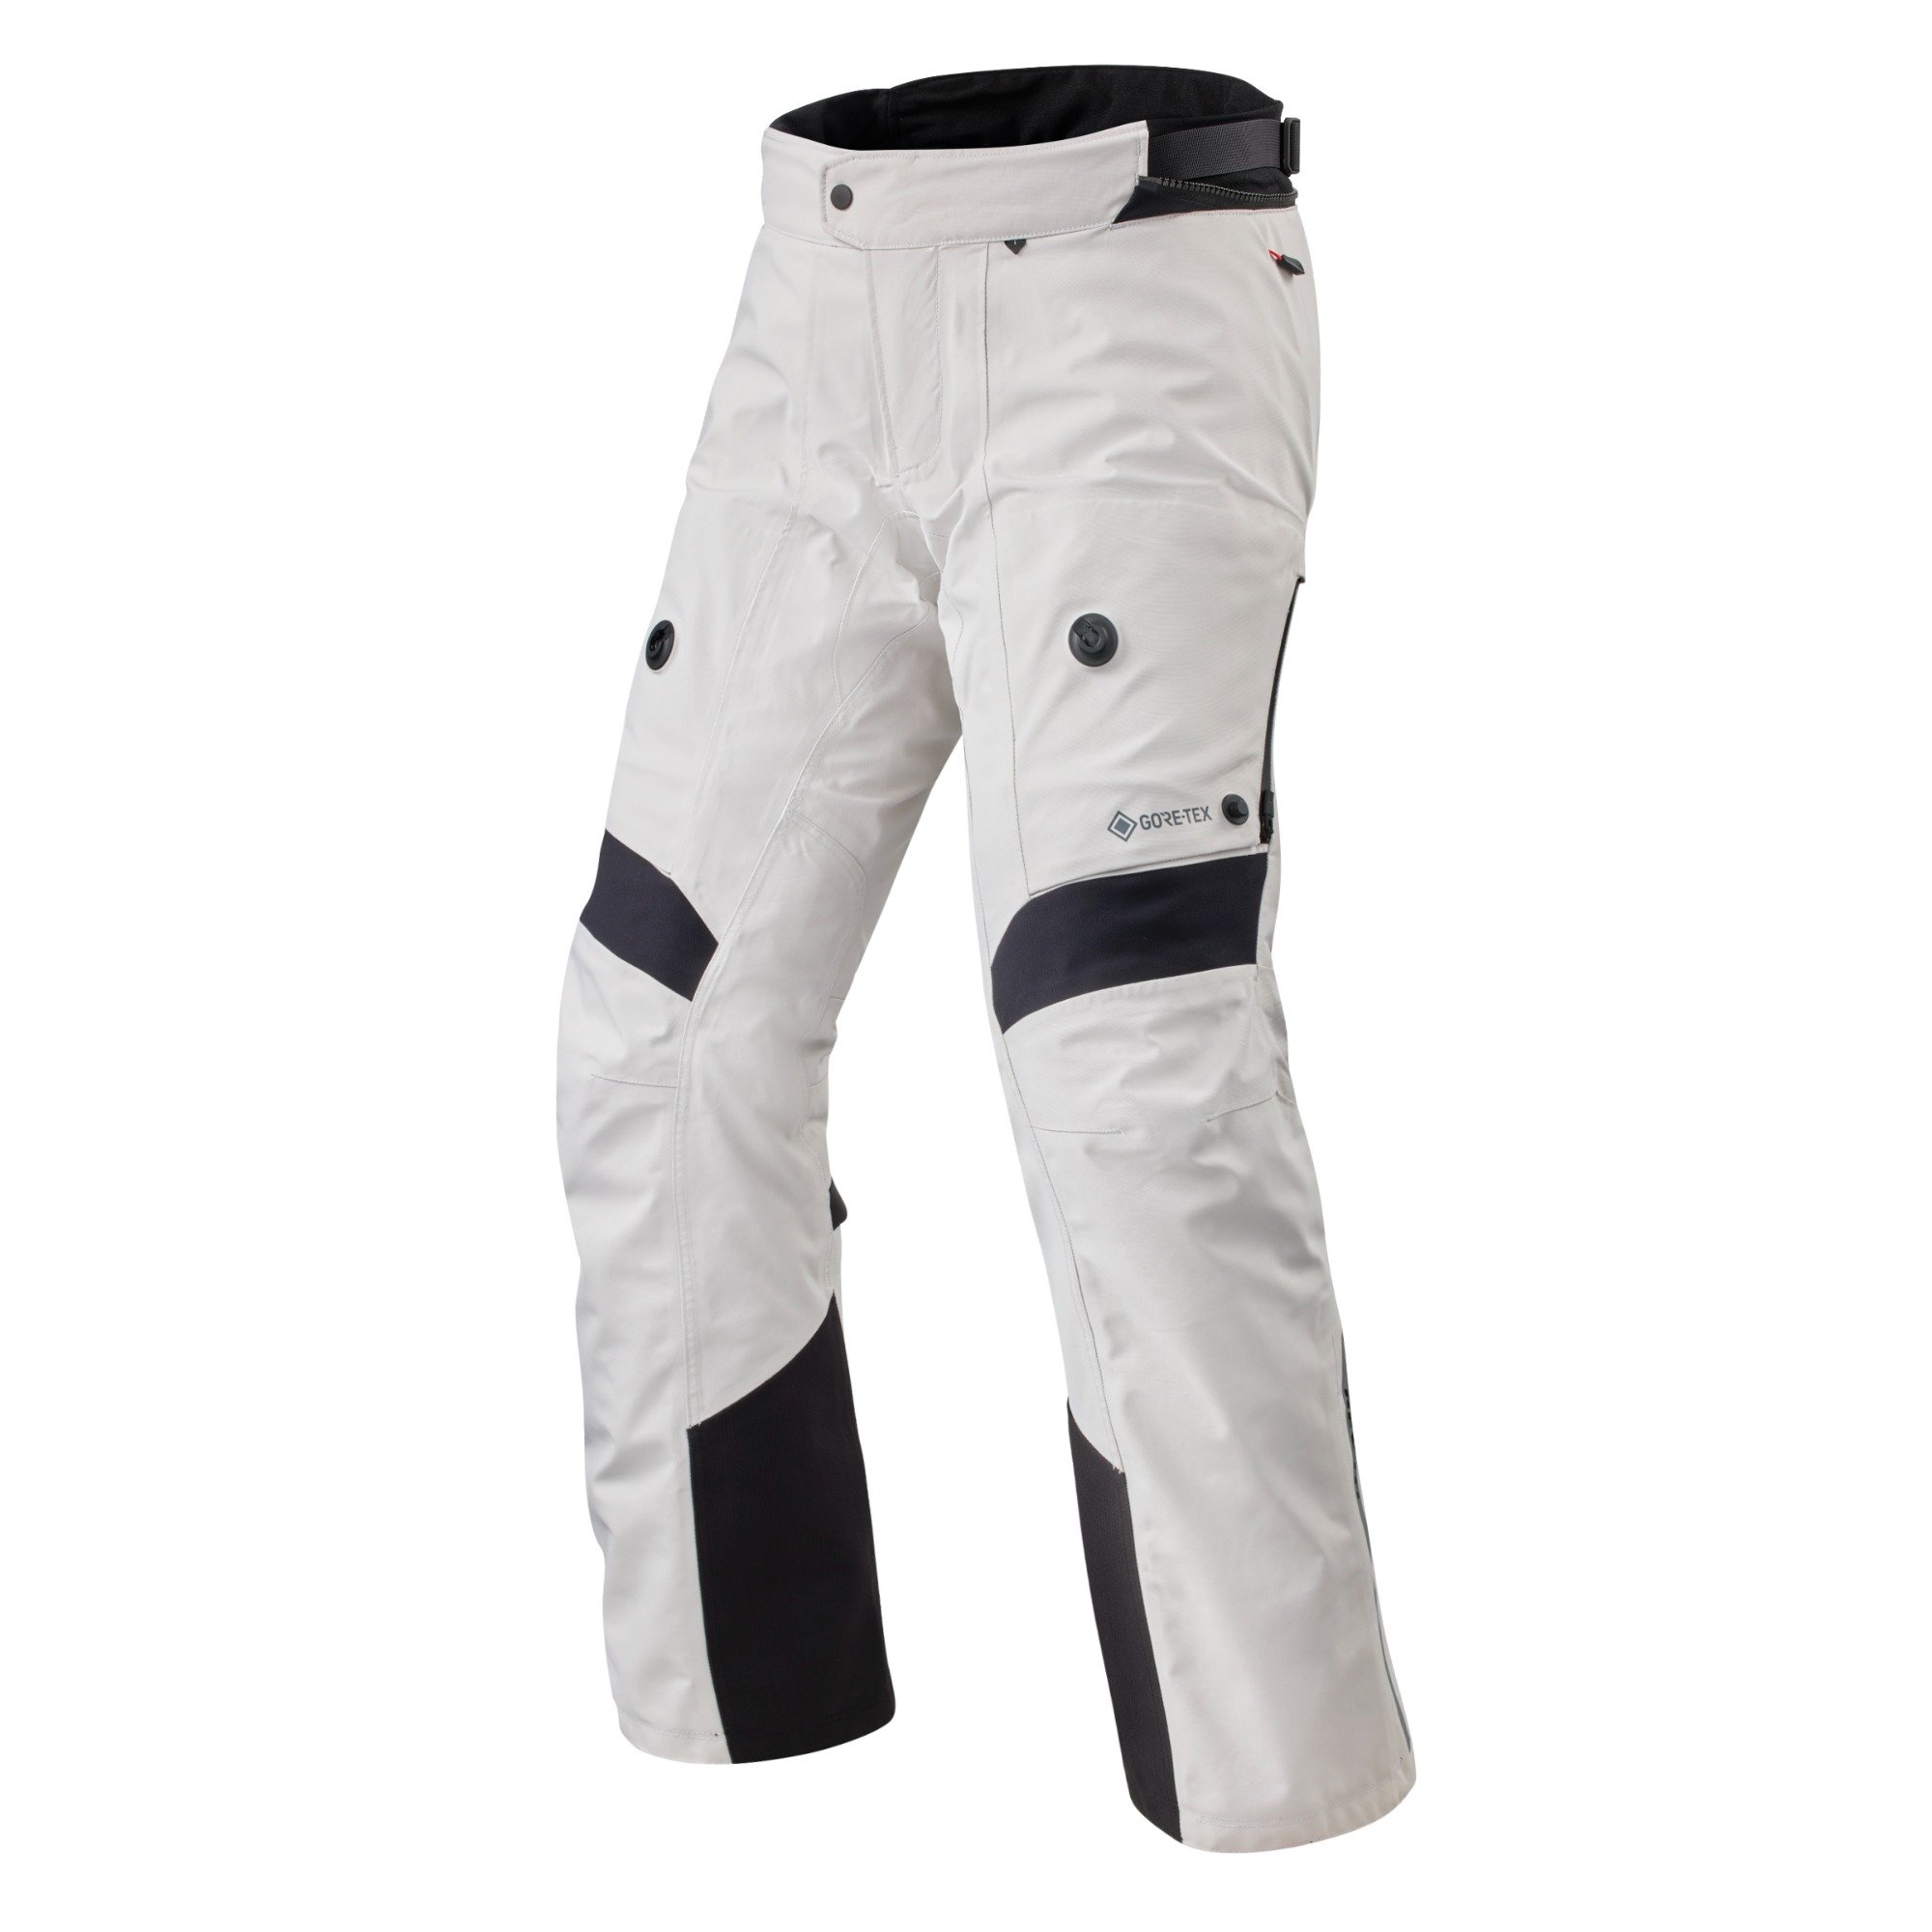 Image of REV'IT! Pants Poseidon 3 GTX Silver Black Short Motorcycle Pants Talla XL